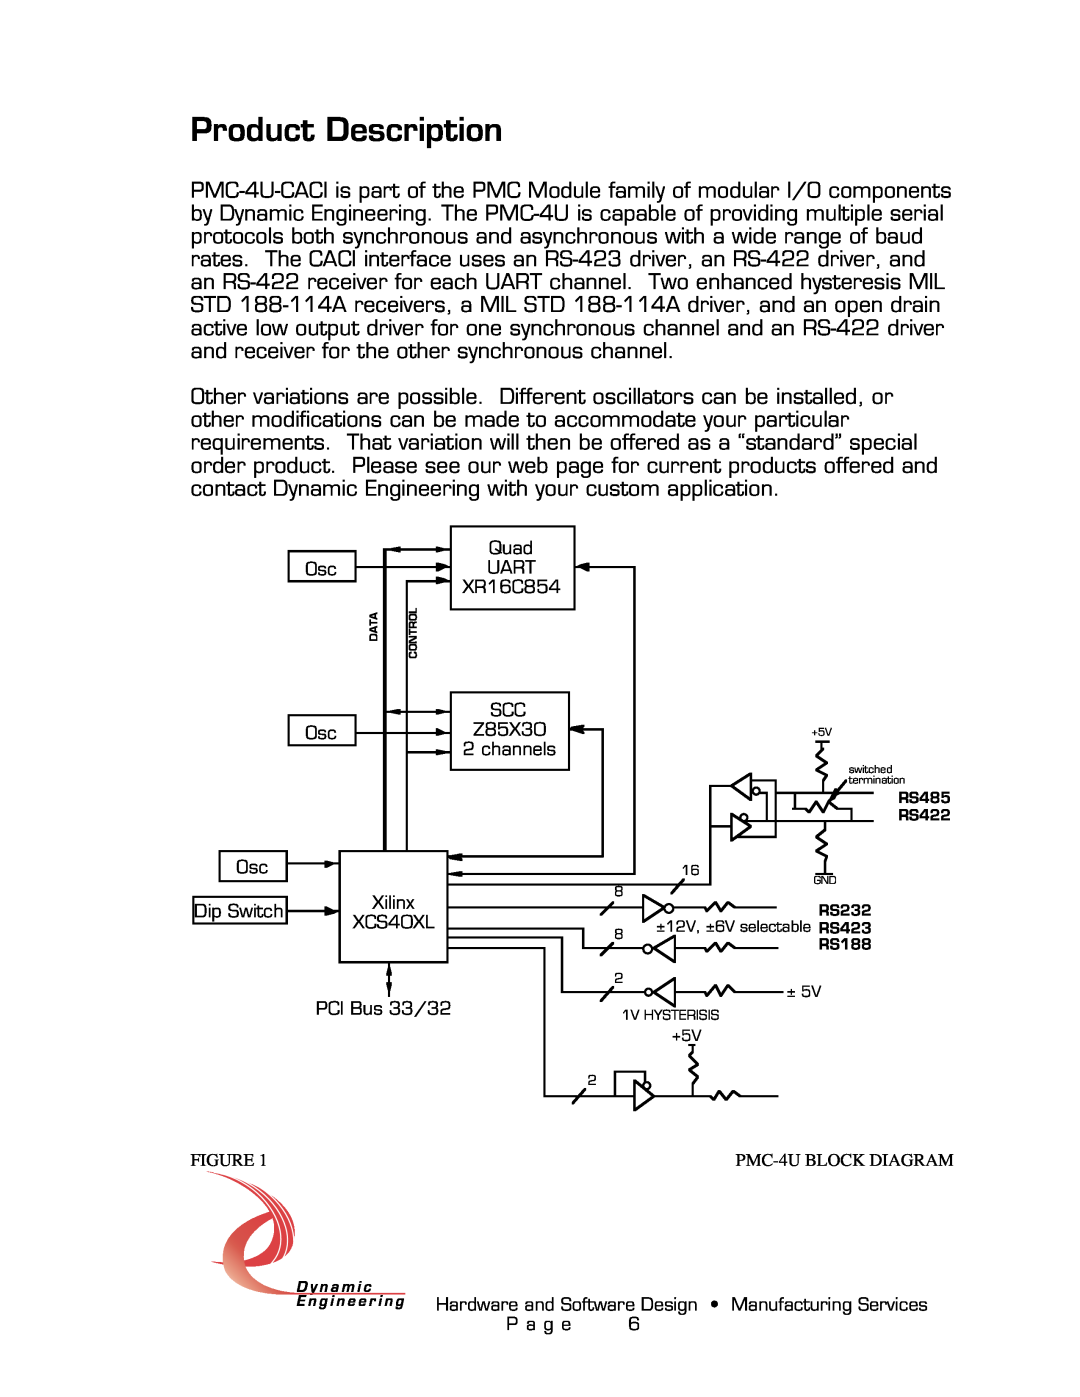 American Dynamics PMC-4U-CACI user manual Product Description 